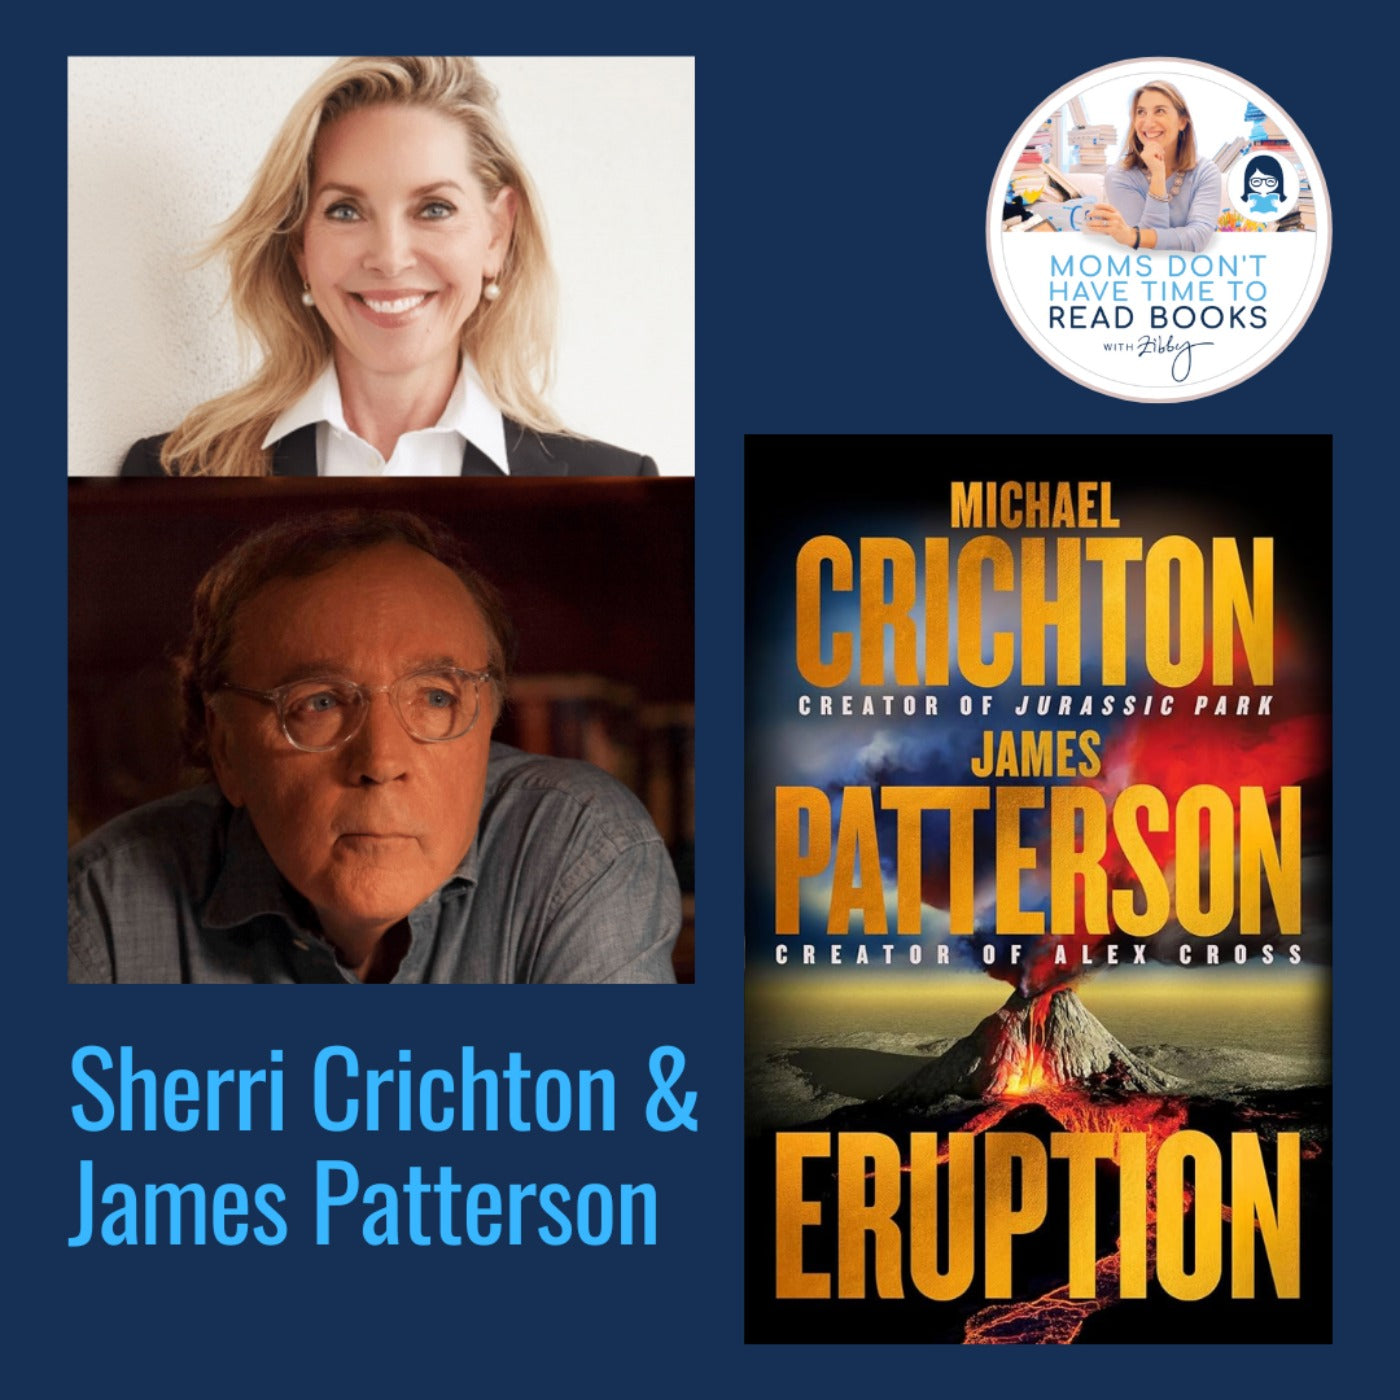 Sherri Crichton and James Patterson, ERUPTION